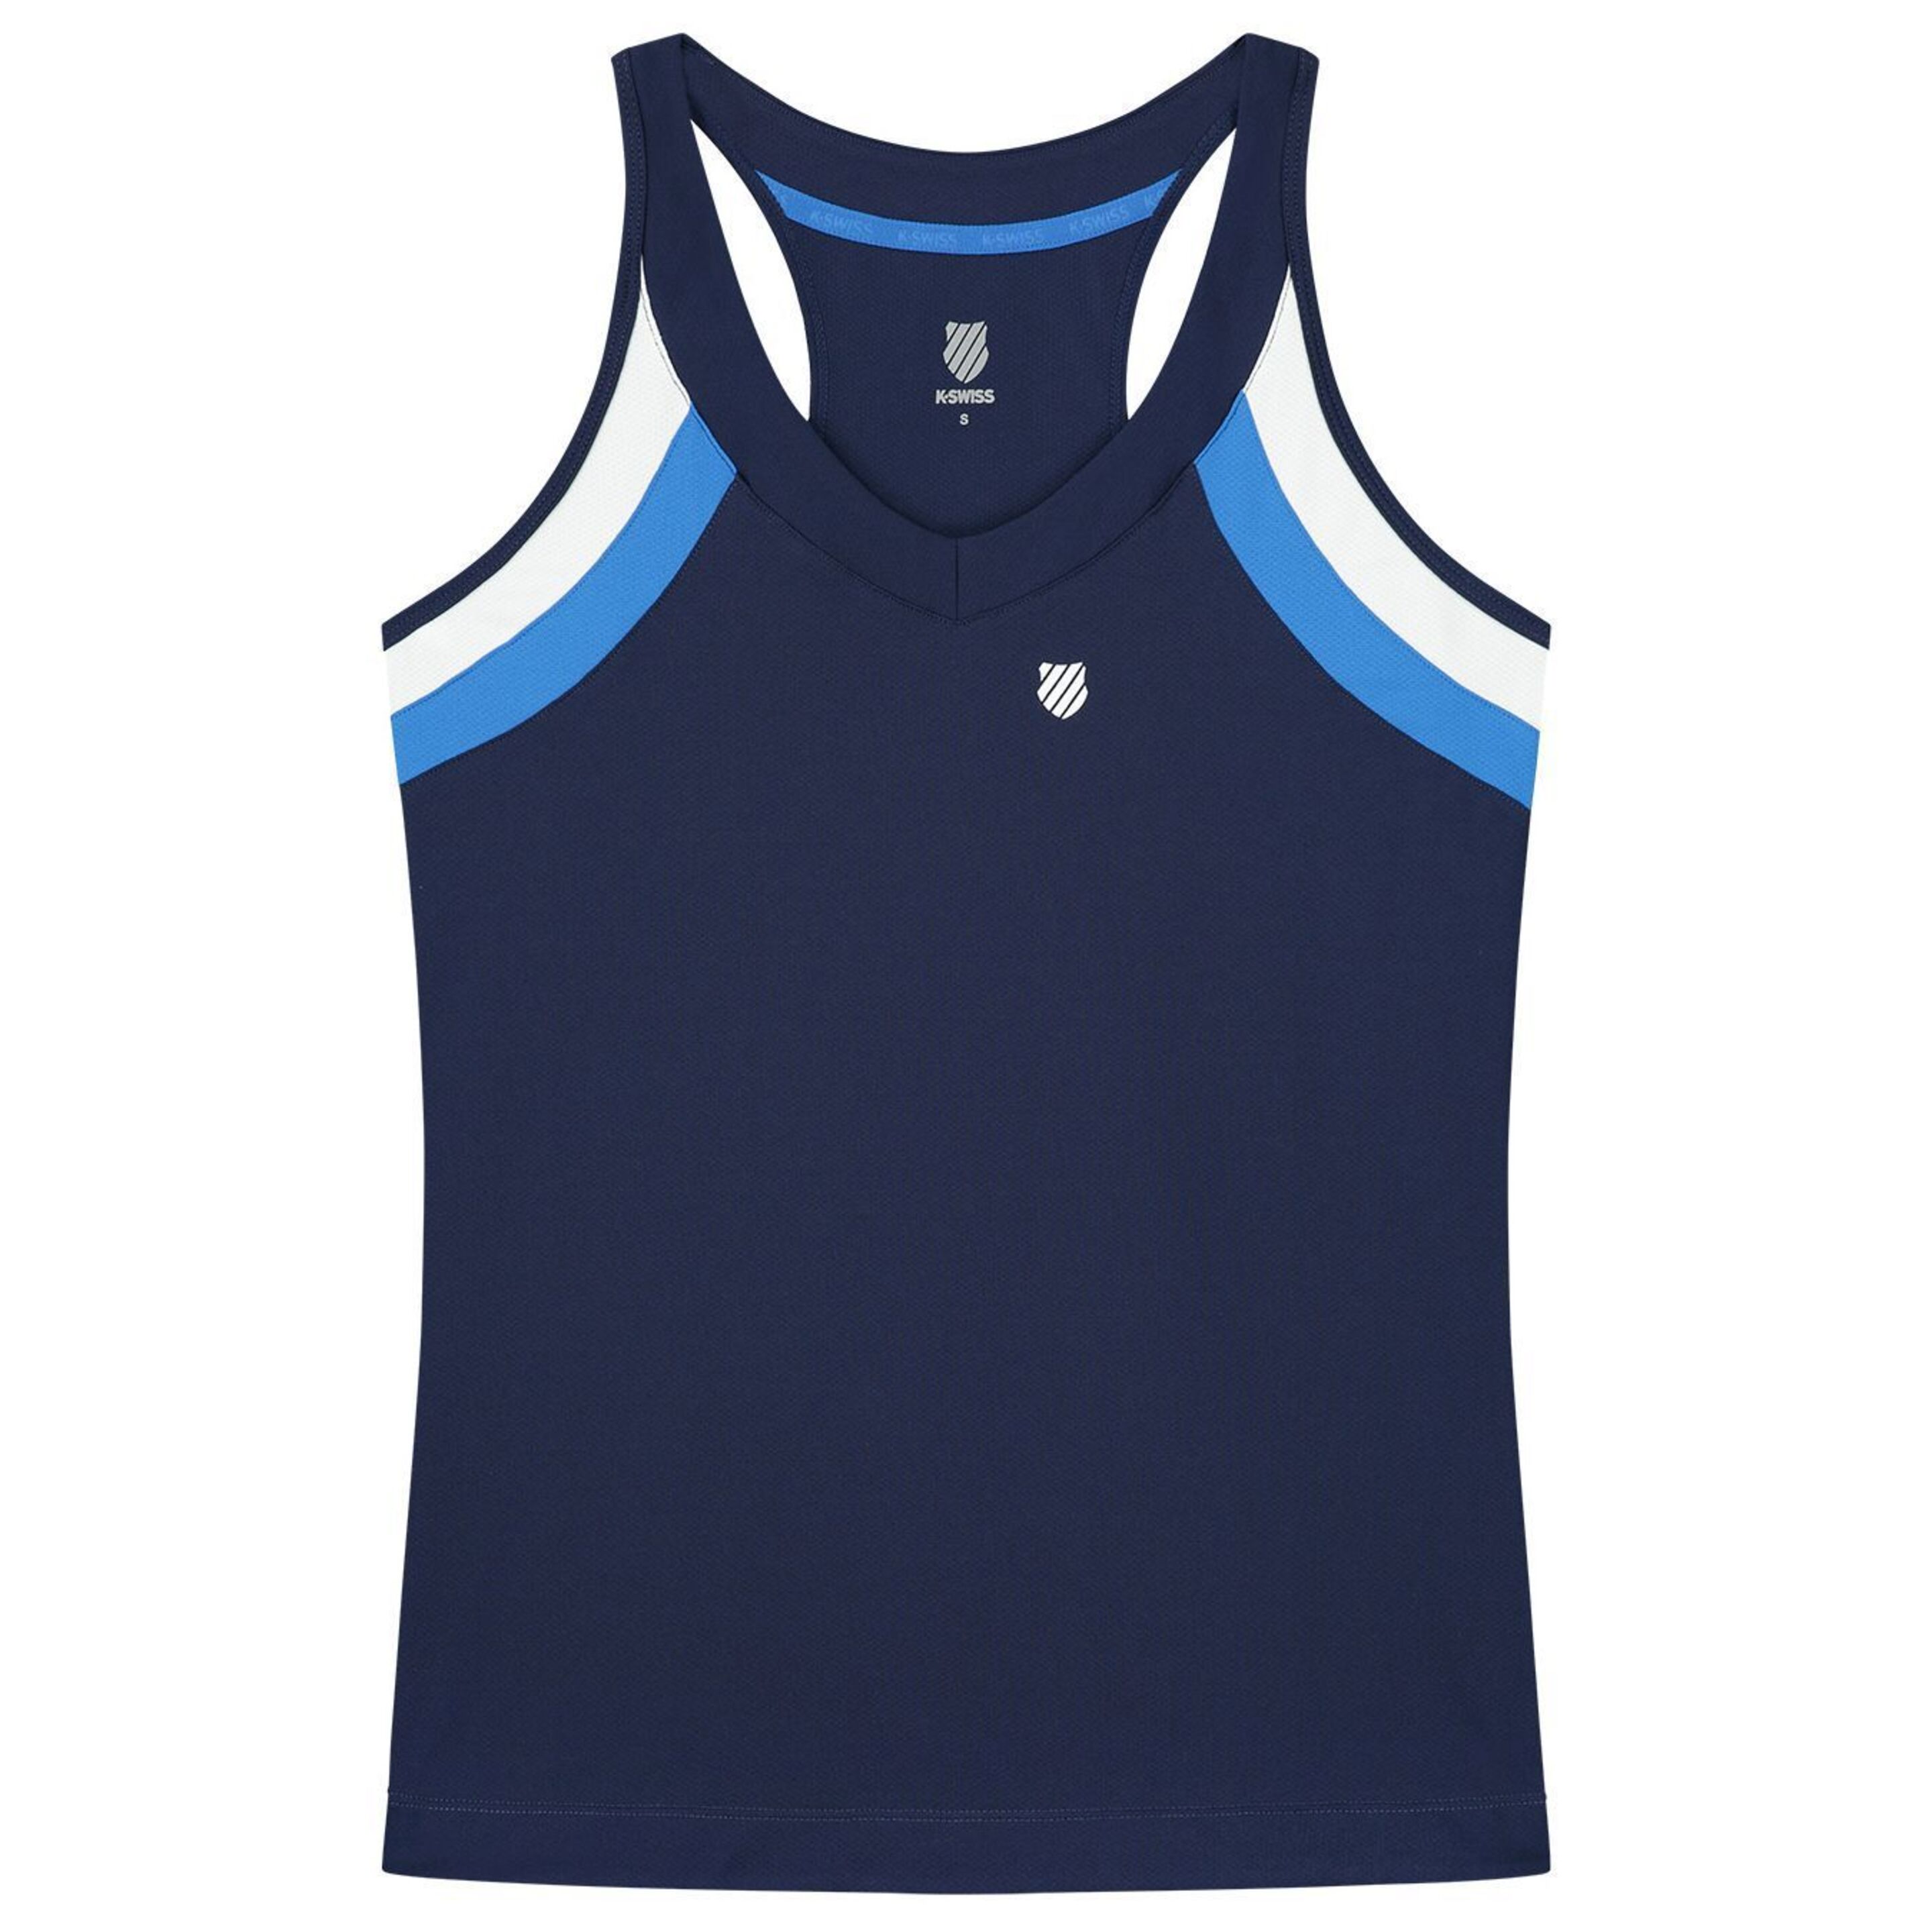 Camiseta De Tenis Y Pádel K-swiss Tirantes Core Team - Azul Marino  MKP